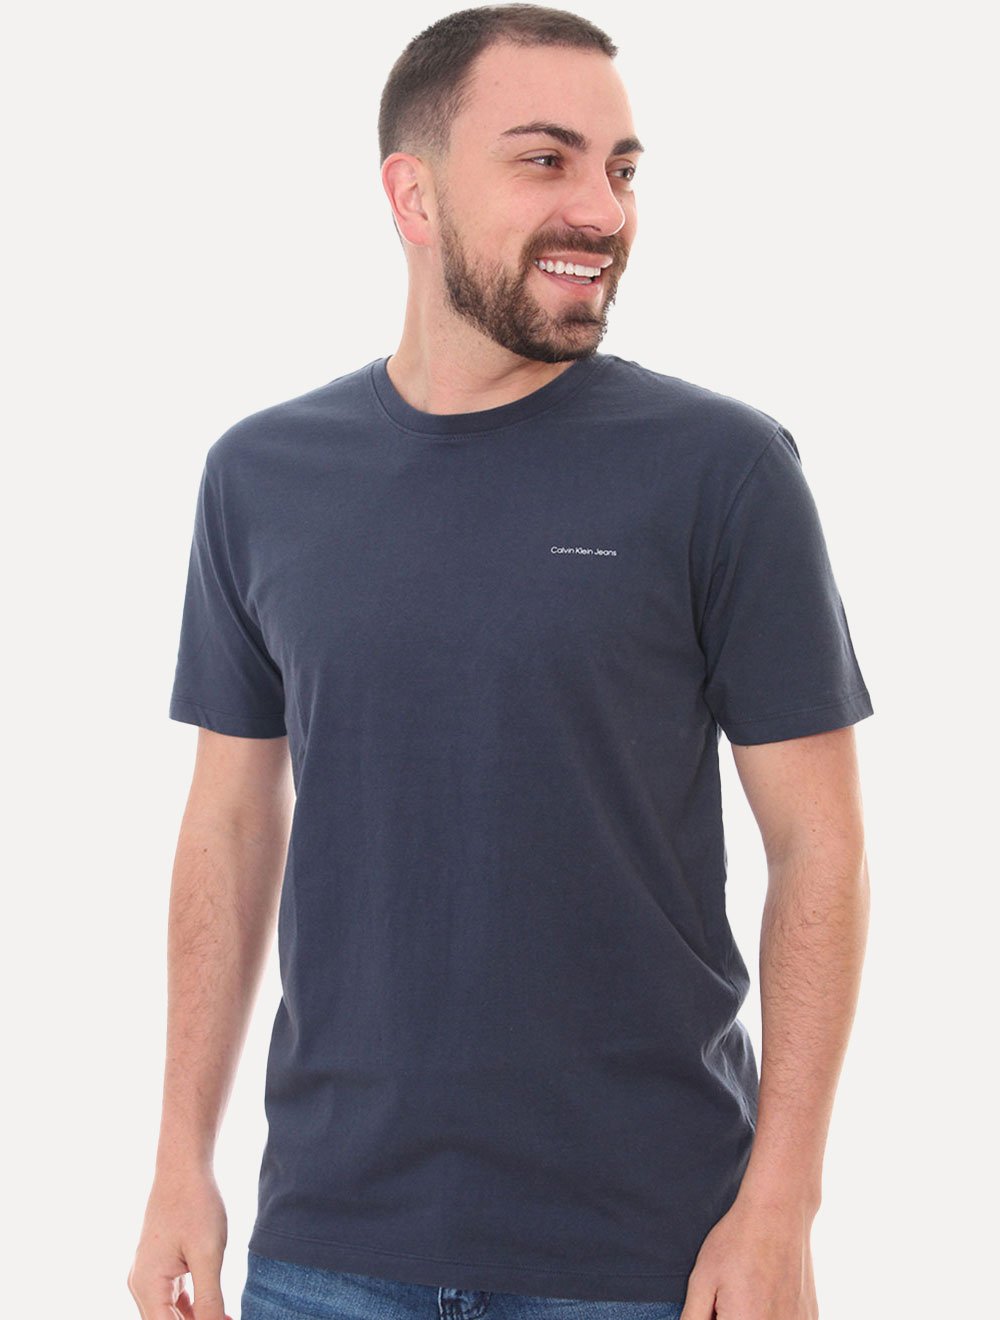 Camiseta Calvin Klein Jeans Masculina Light New Logo Azul Marinho